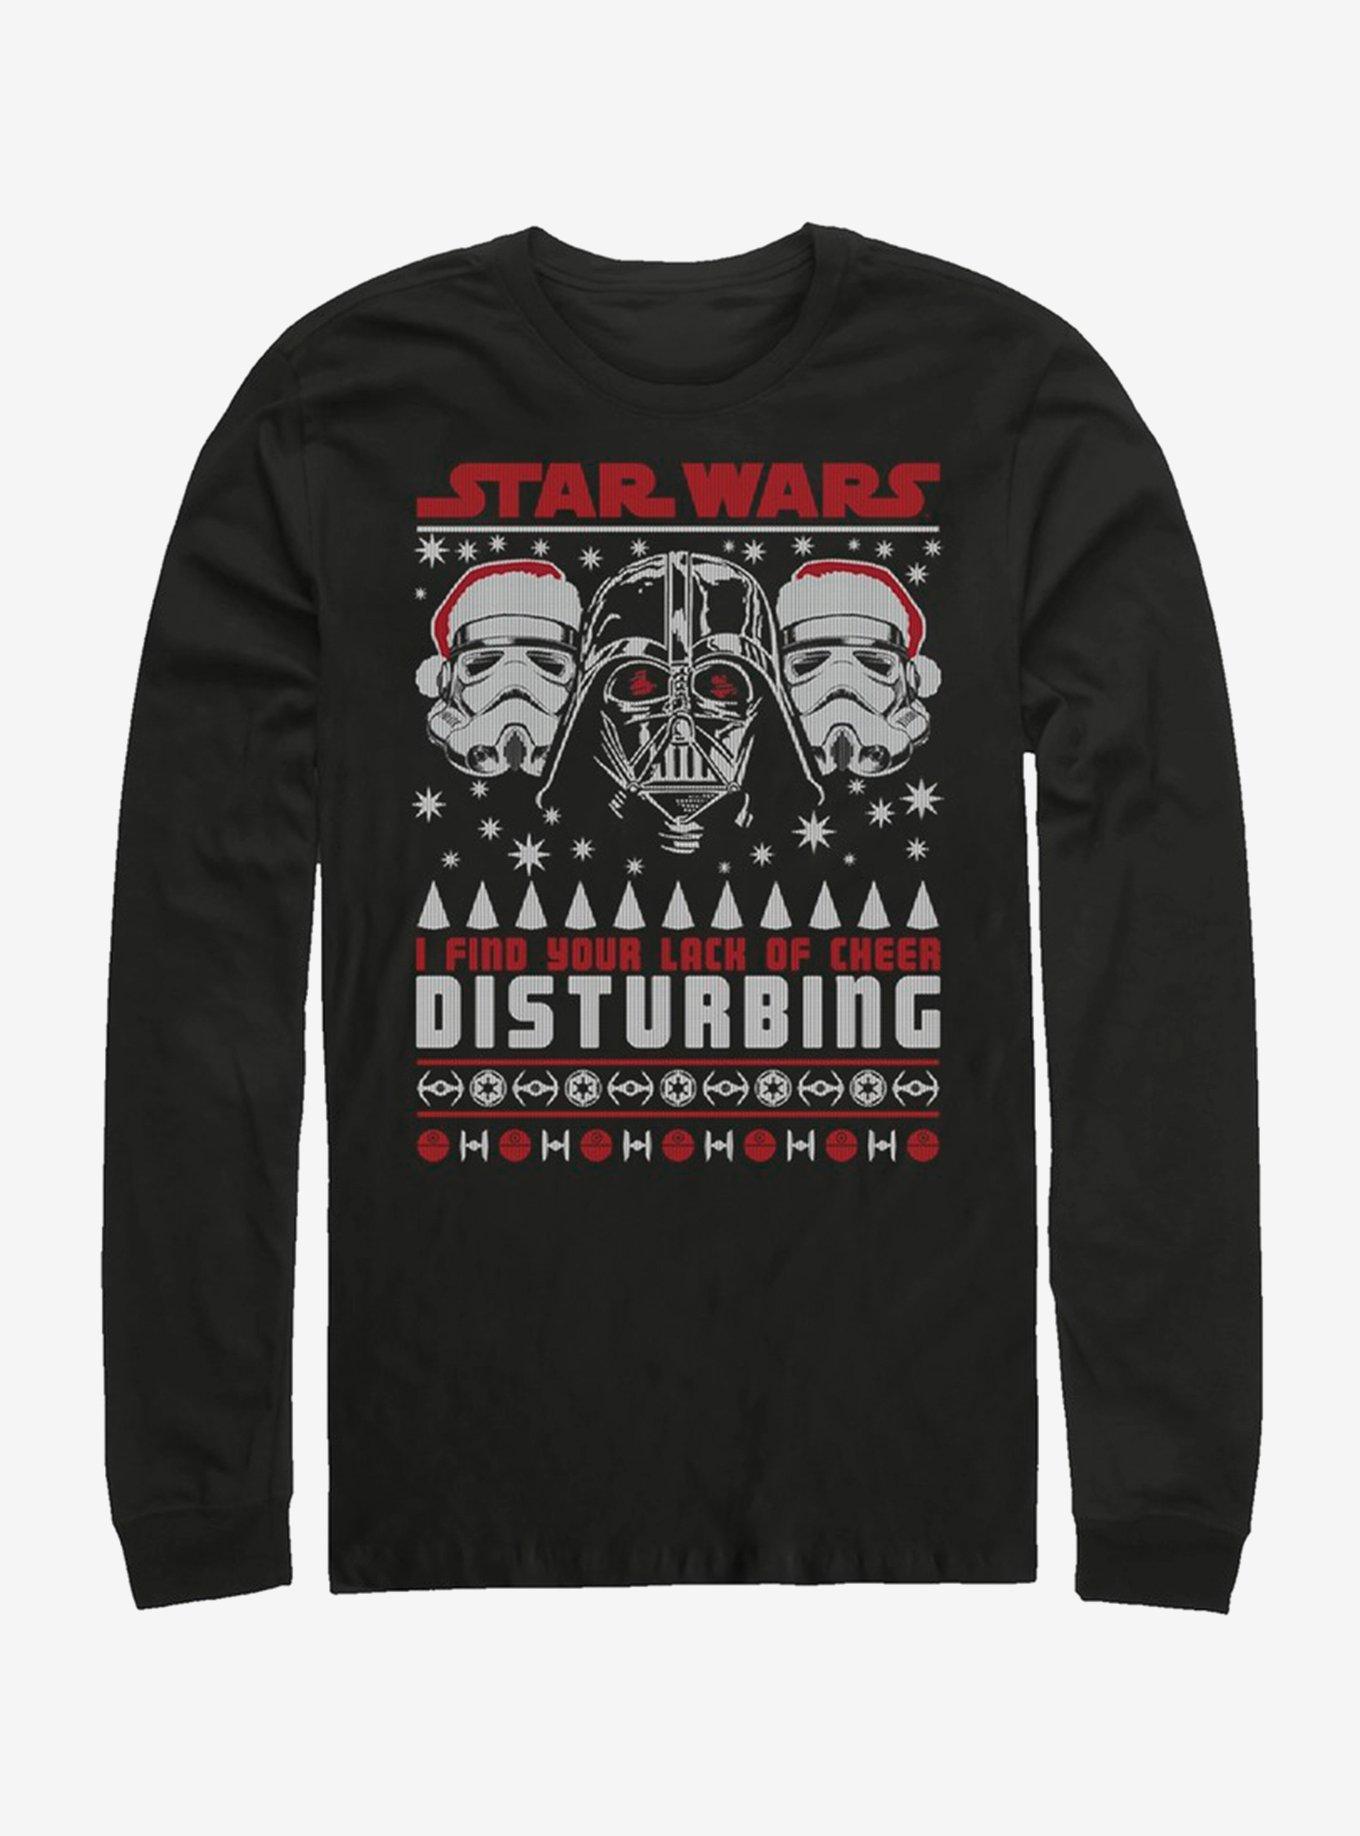 Star Wars Disturbing Sweater Long-Sleeve T-Shirt, BLACK, hi-res